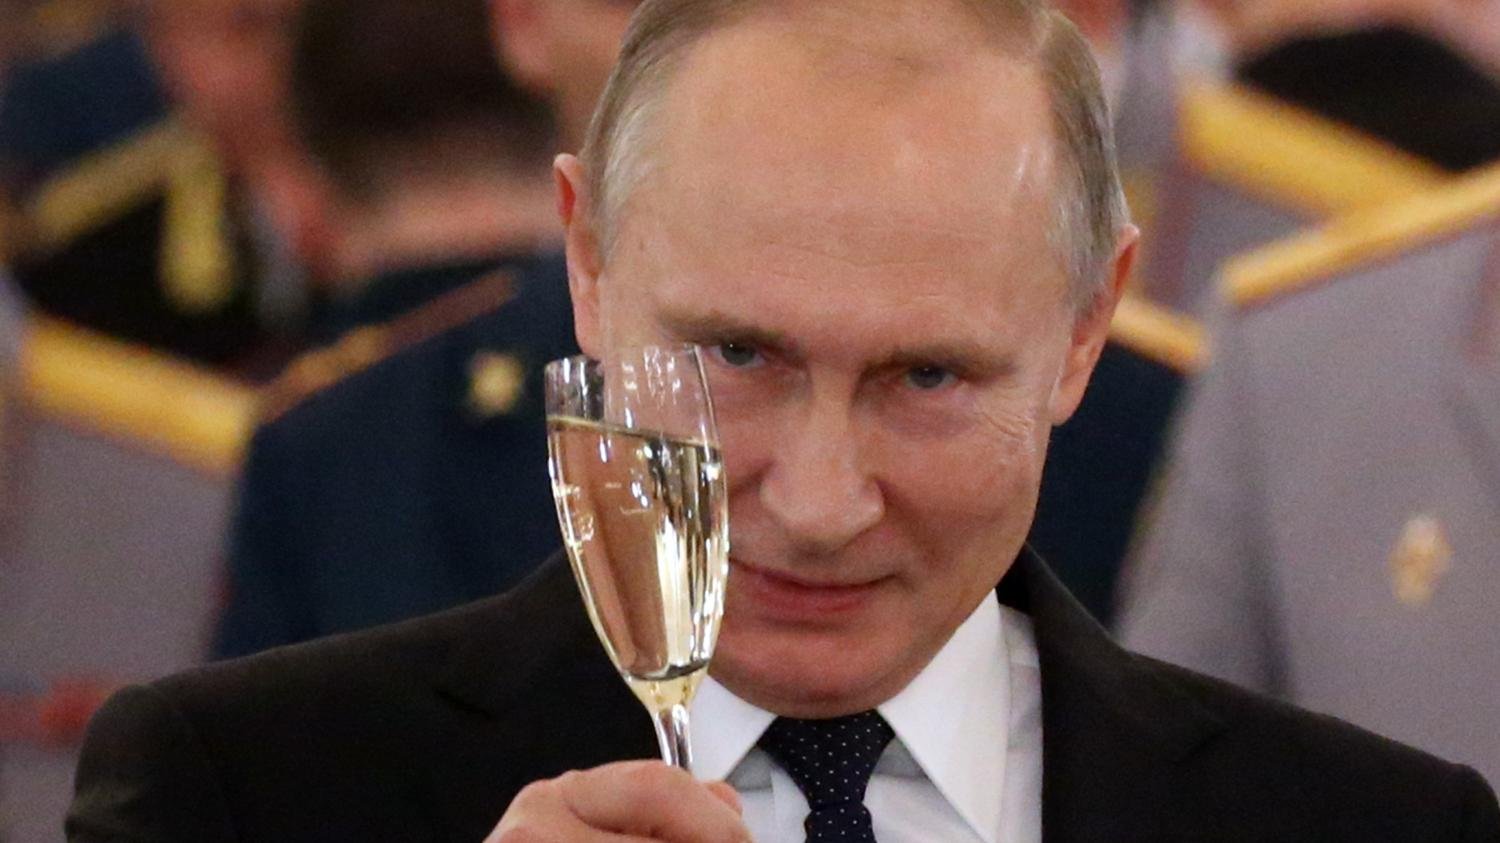 Image of Putin toasting